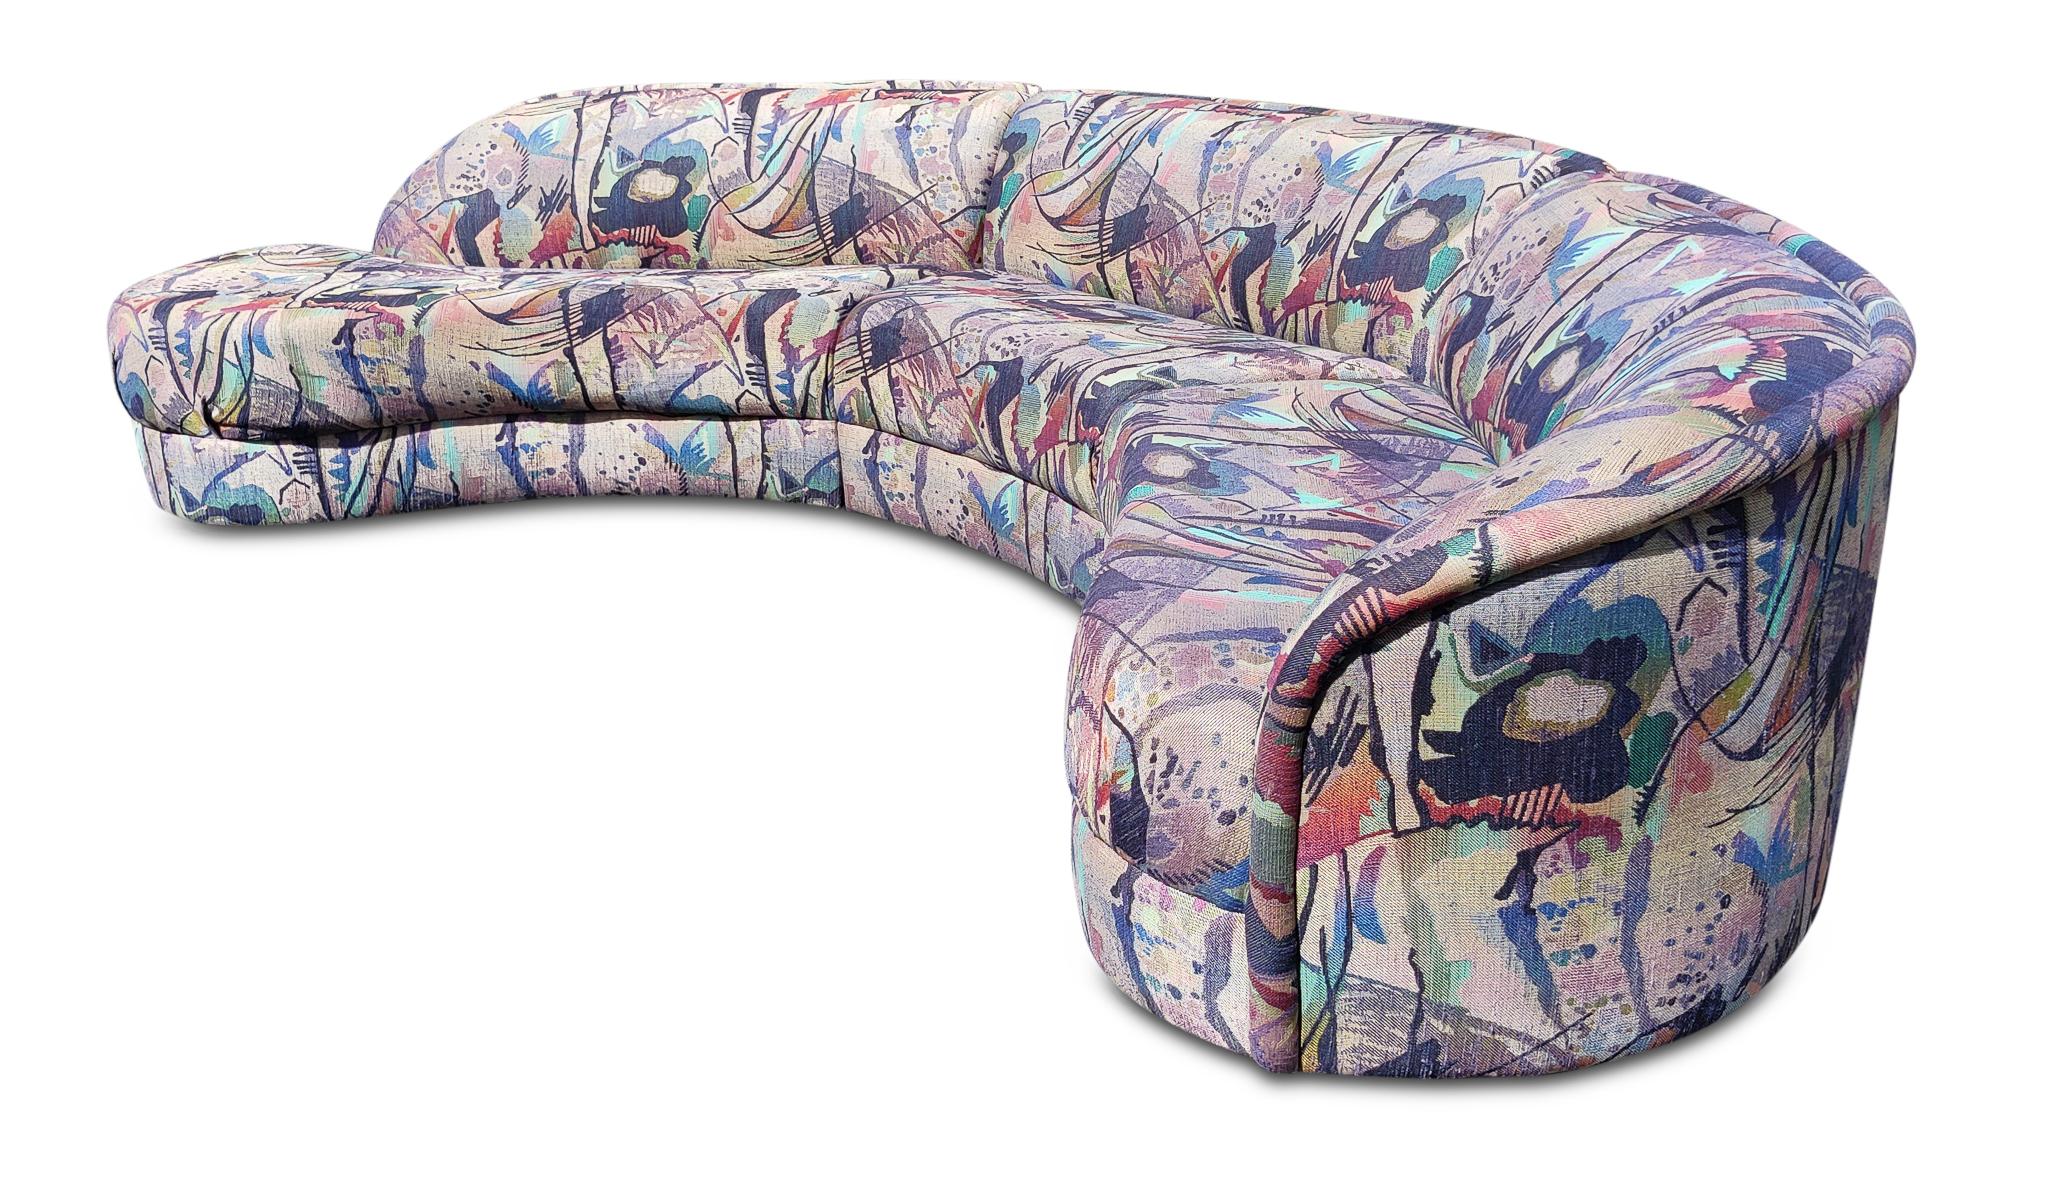 Upholstery Milo Baughman Style by Maurice Villency Vintage Post-Modern Serpentine Sofa 1980